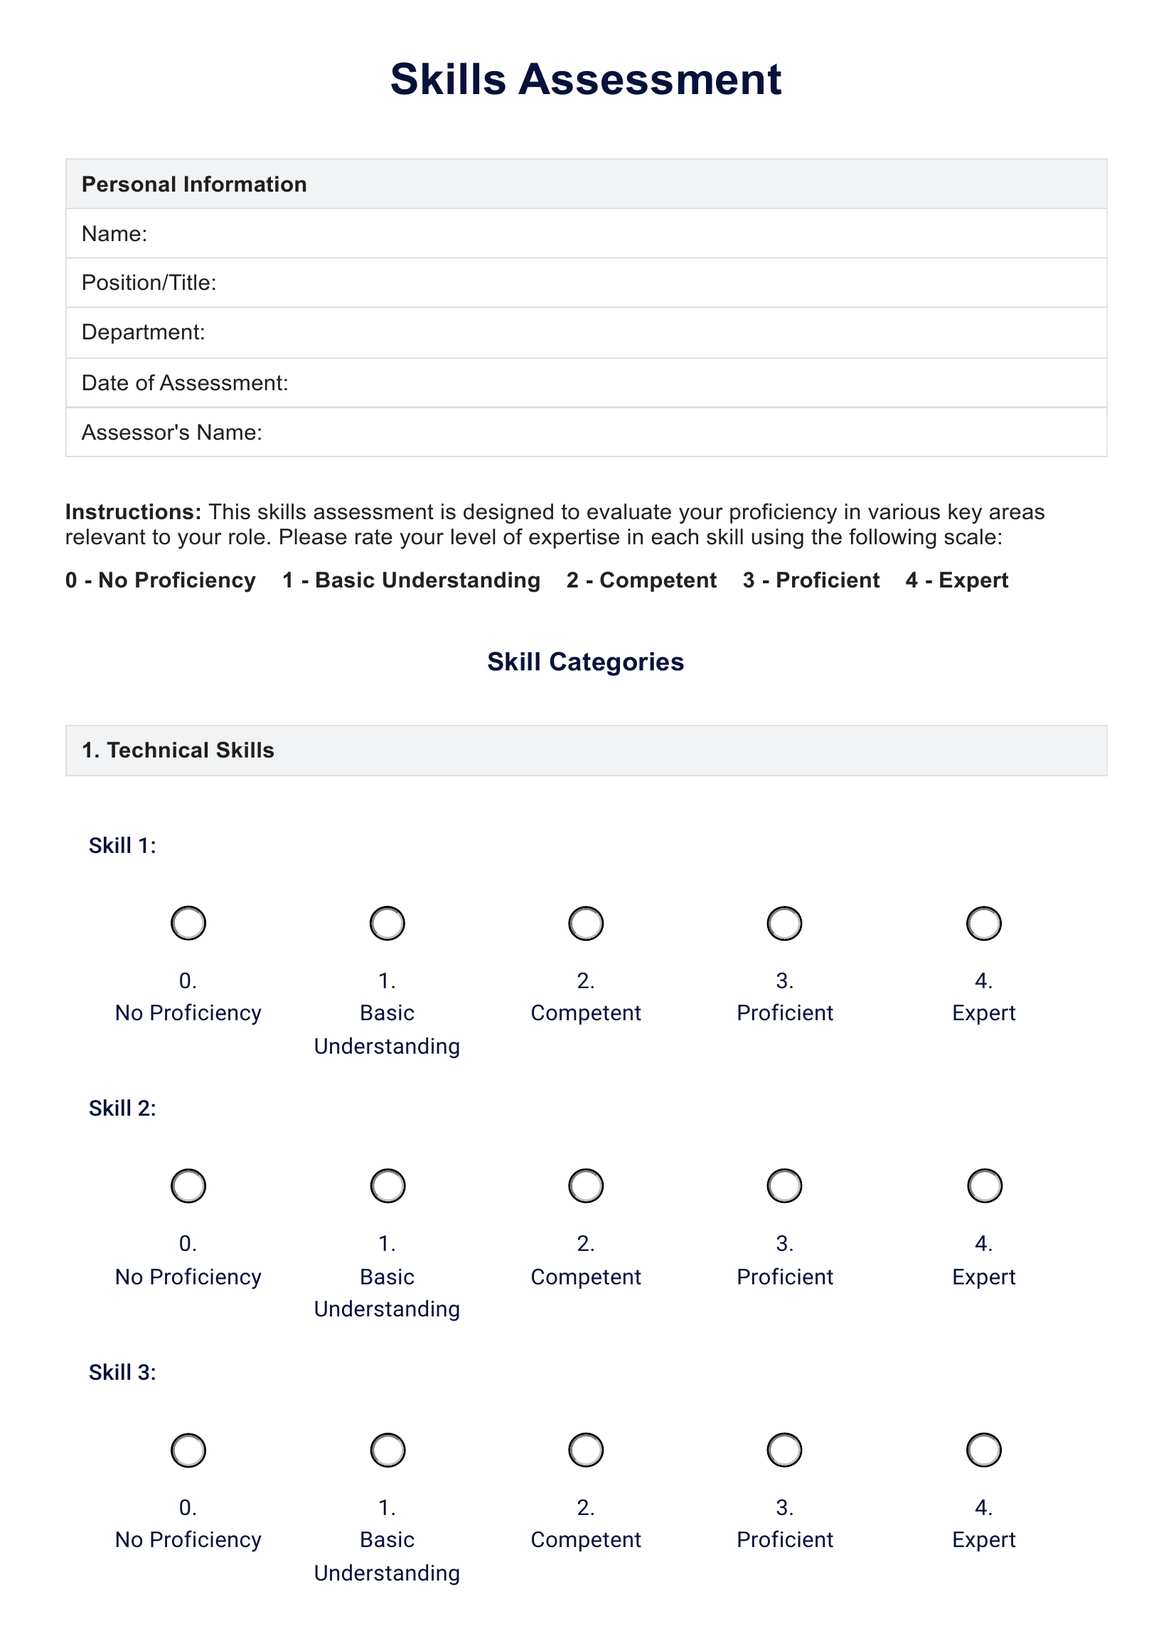 Skills Assessment Template PDF Example